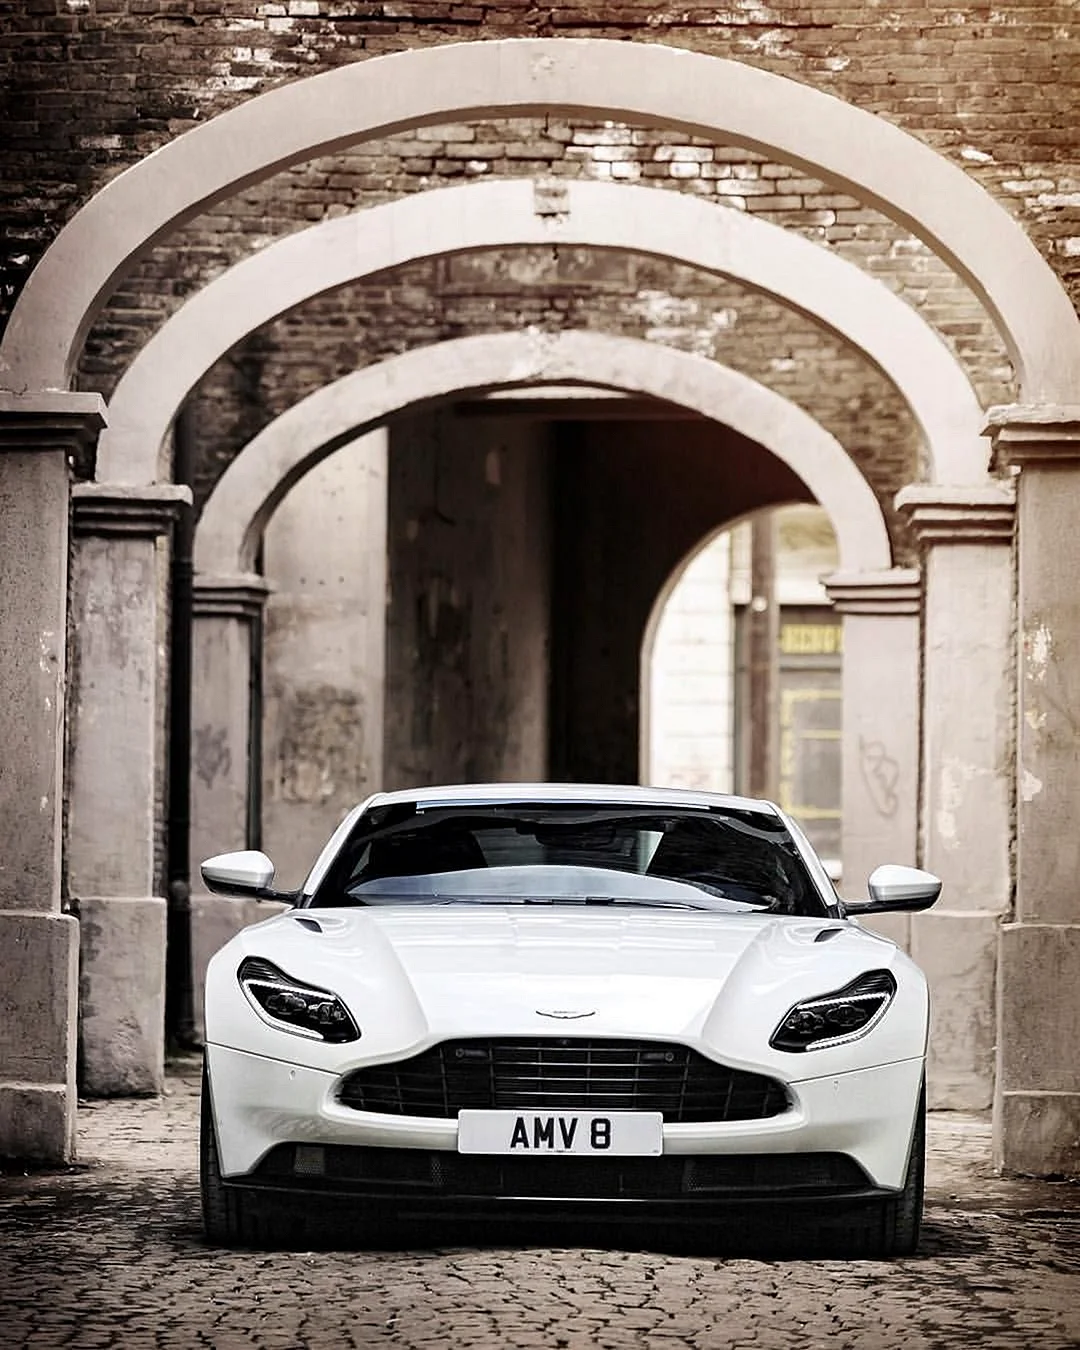 Aston Martin Wallpaper For iPhone